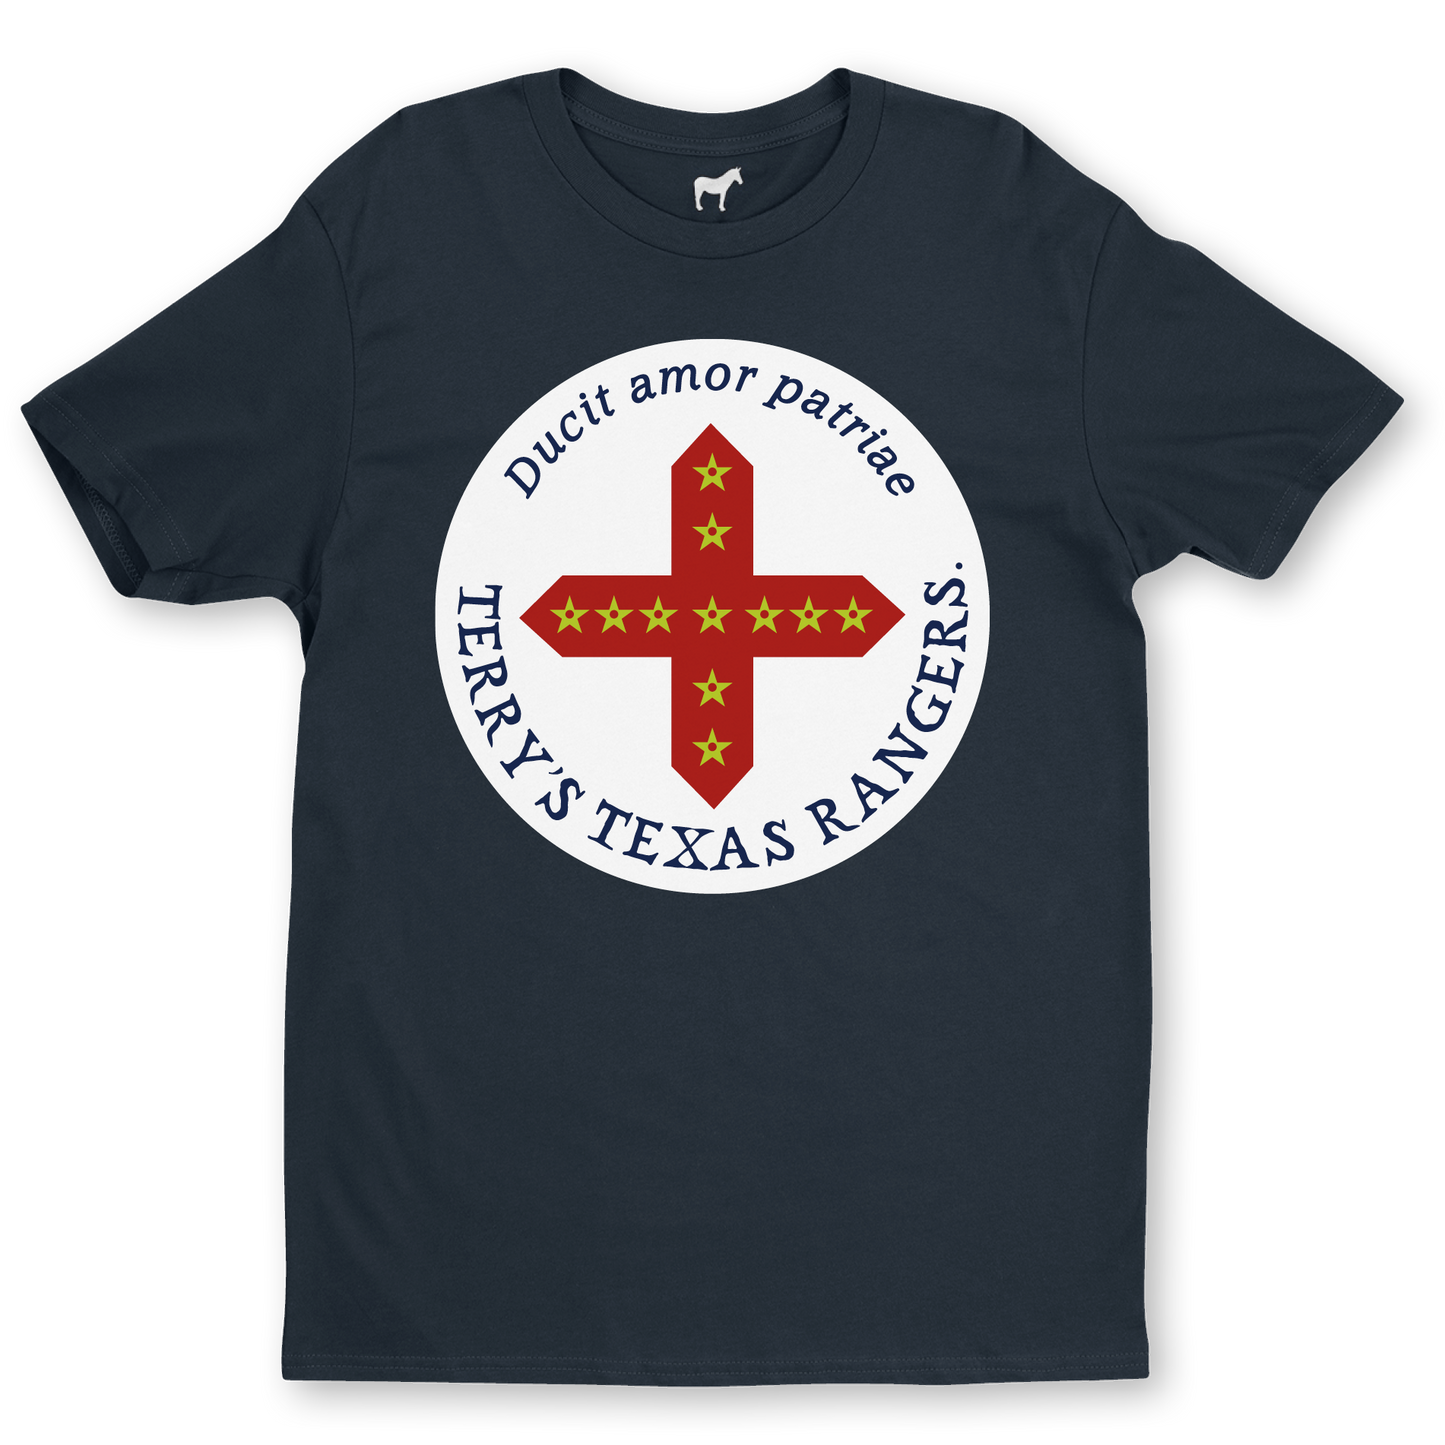 "Ducit amor patriae" Terry's Texas Rangers - 8th Texas Cavalry - Flag  Shirt